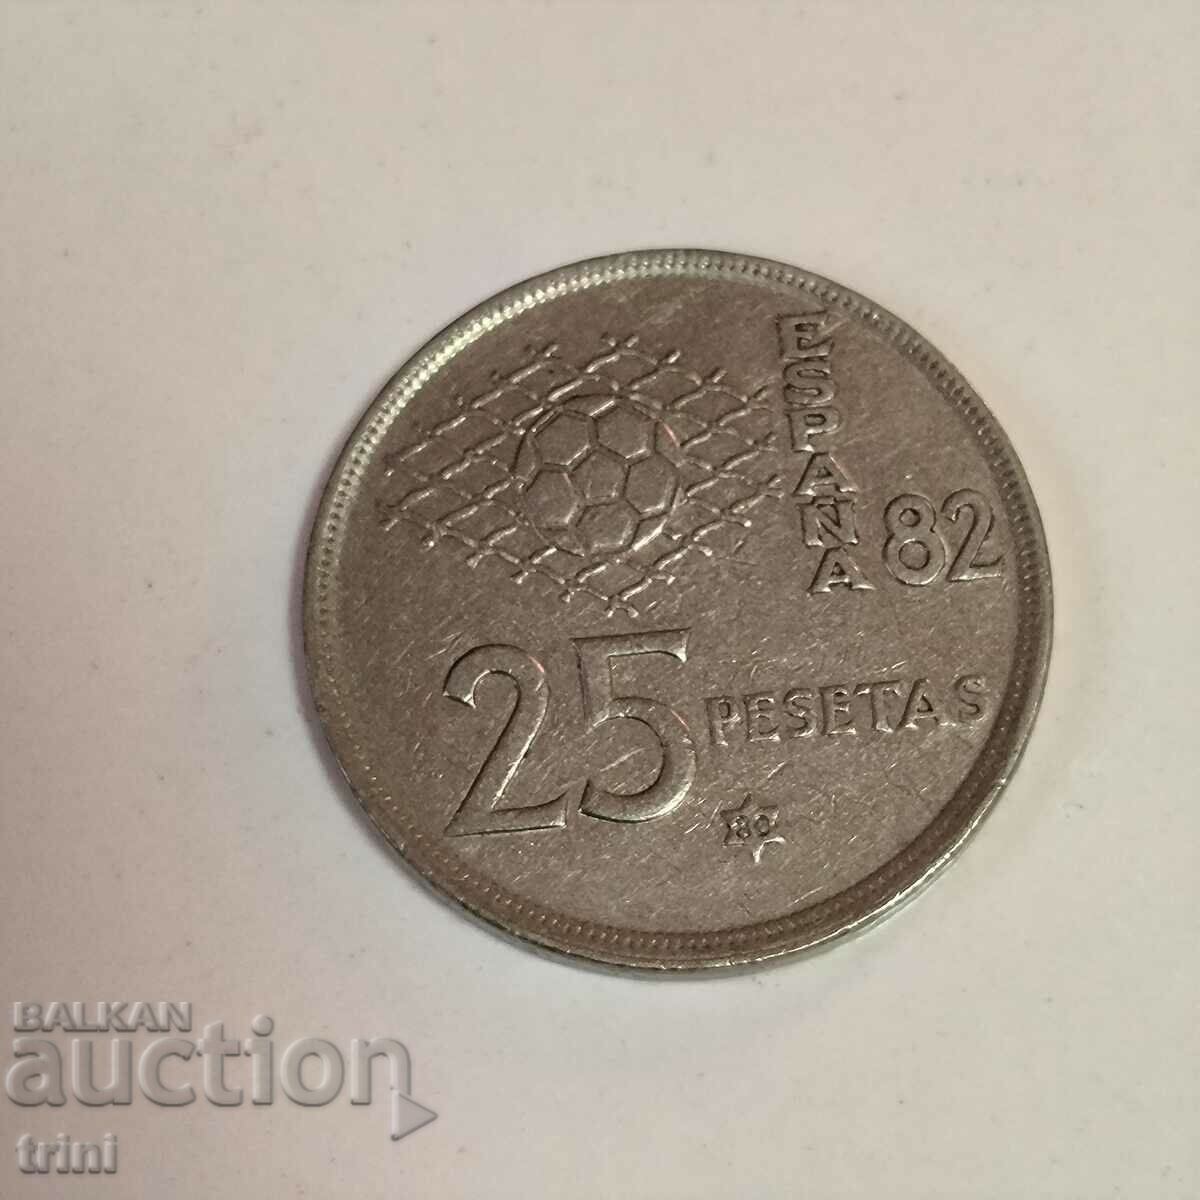 Spania 25 pesetas 1980 an g50